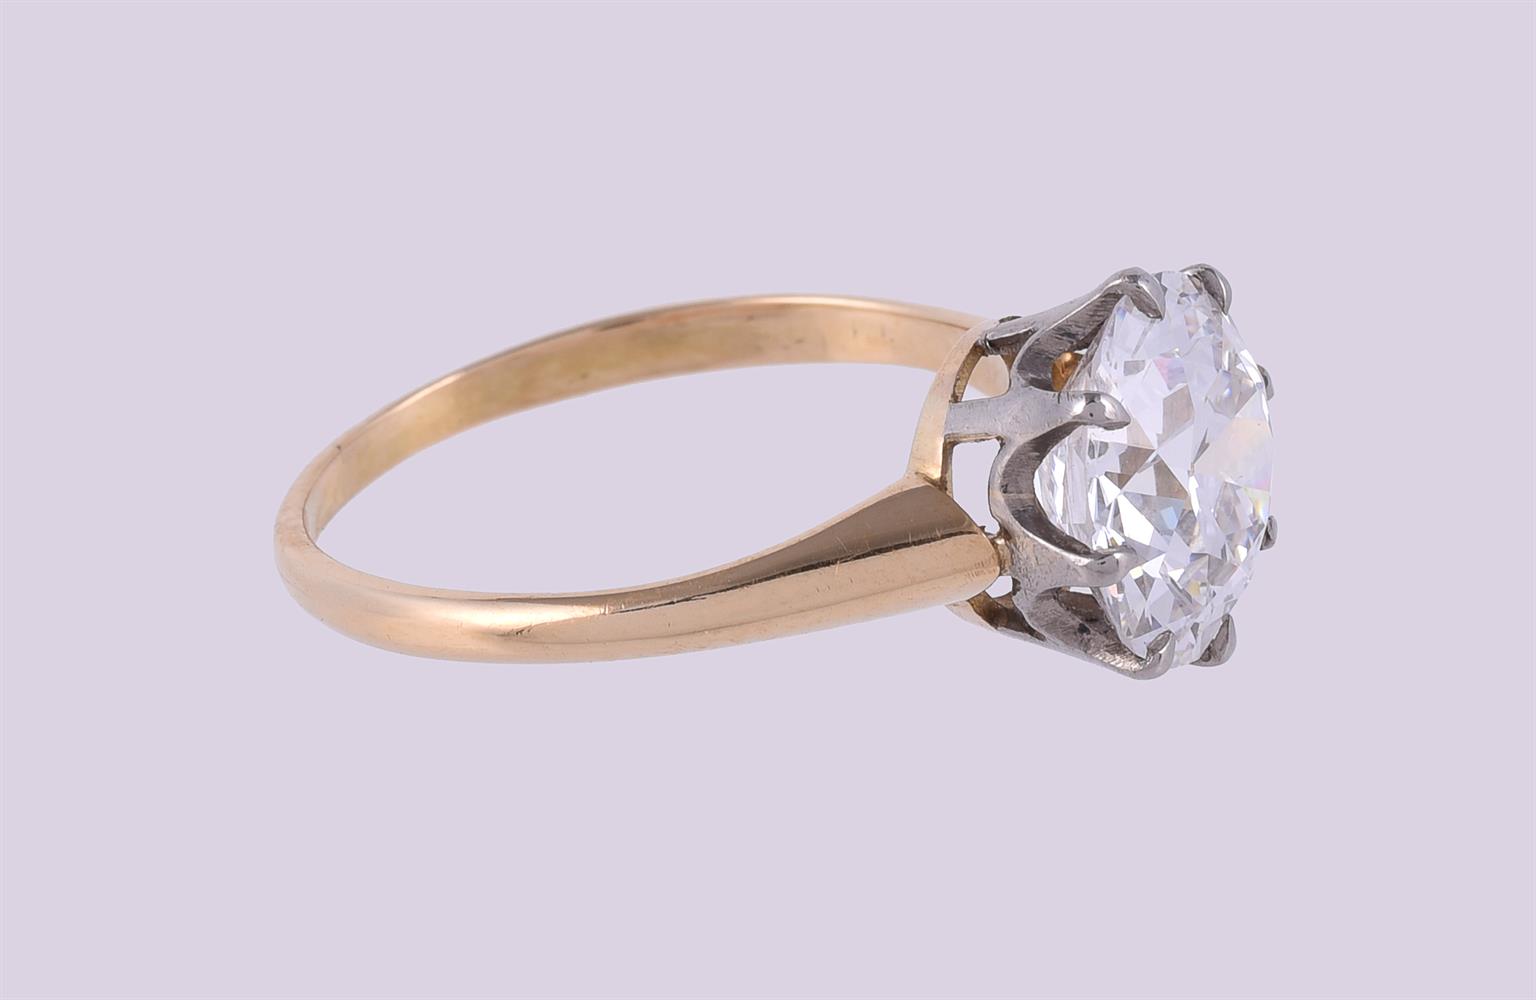 A SINGLE STONE DIAMOND RING - Image 2 of 2